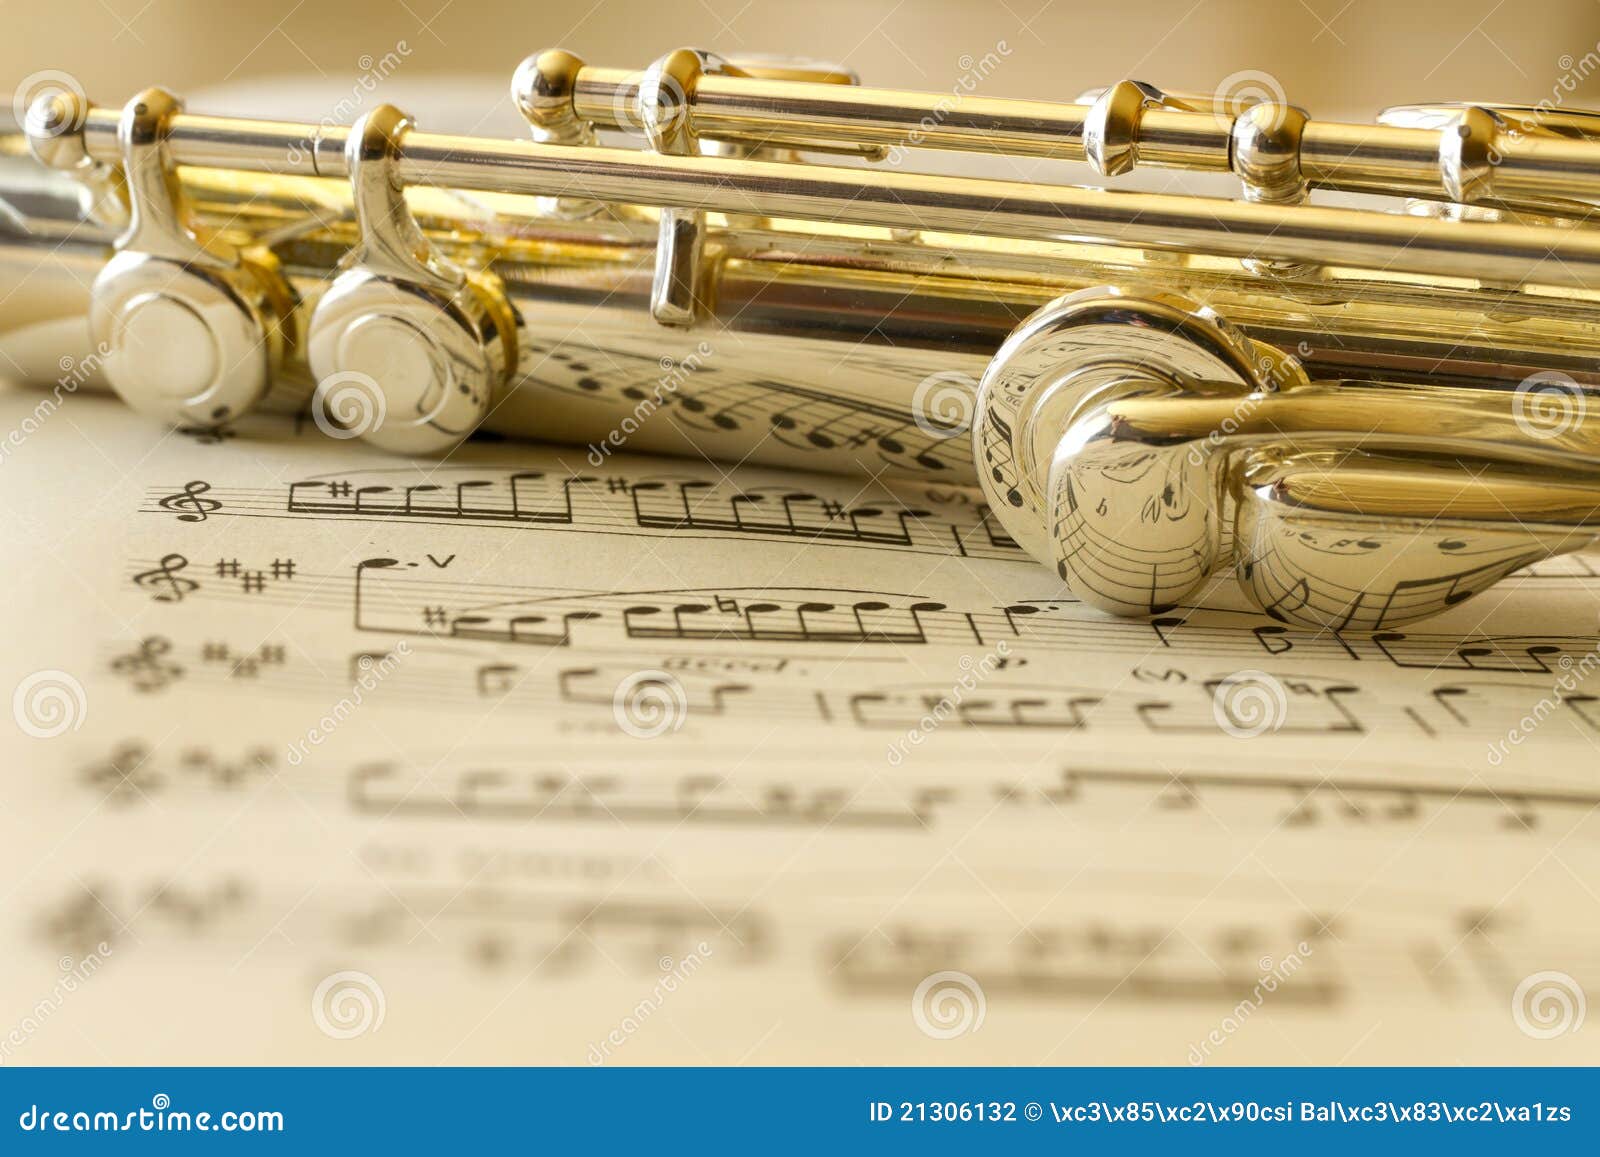 Golden Flute stock photo. Image of metal, instrument - 21306132